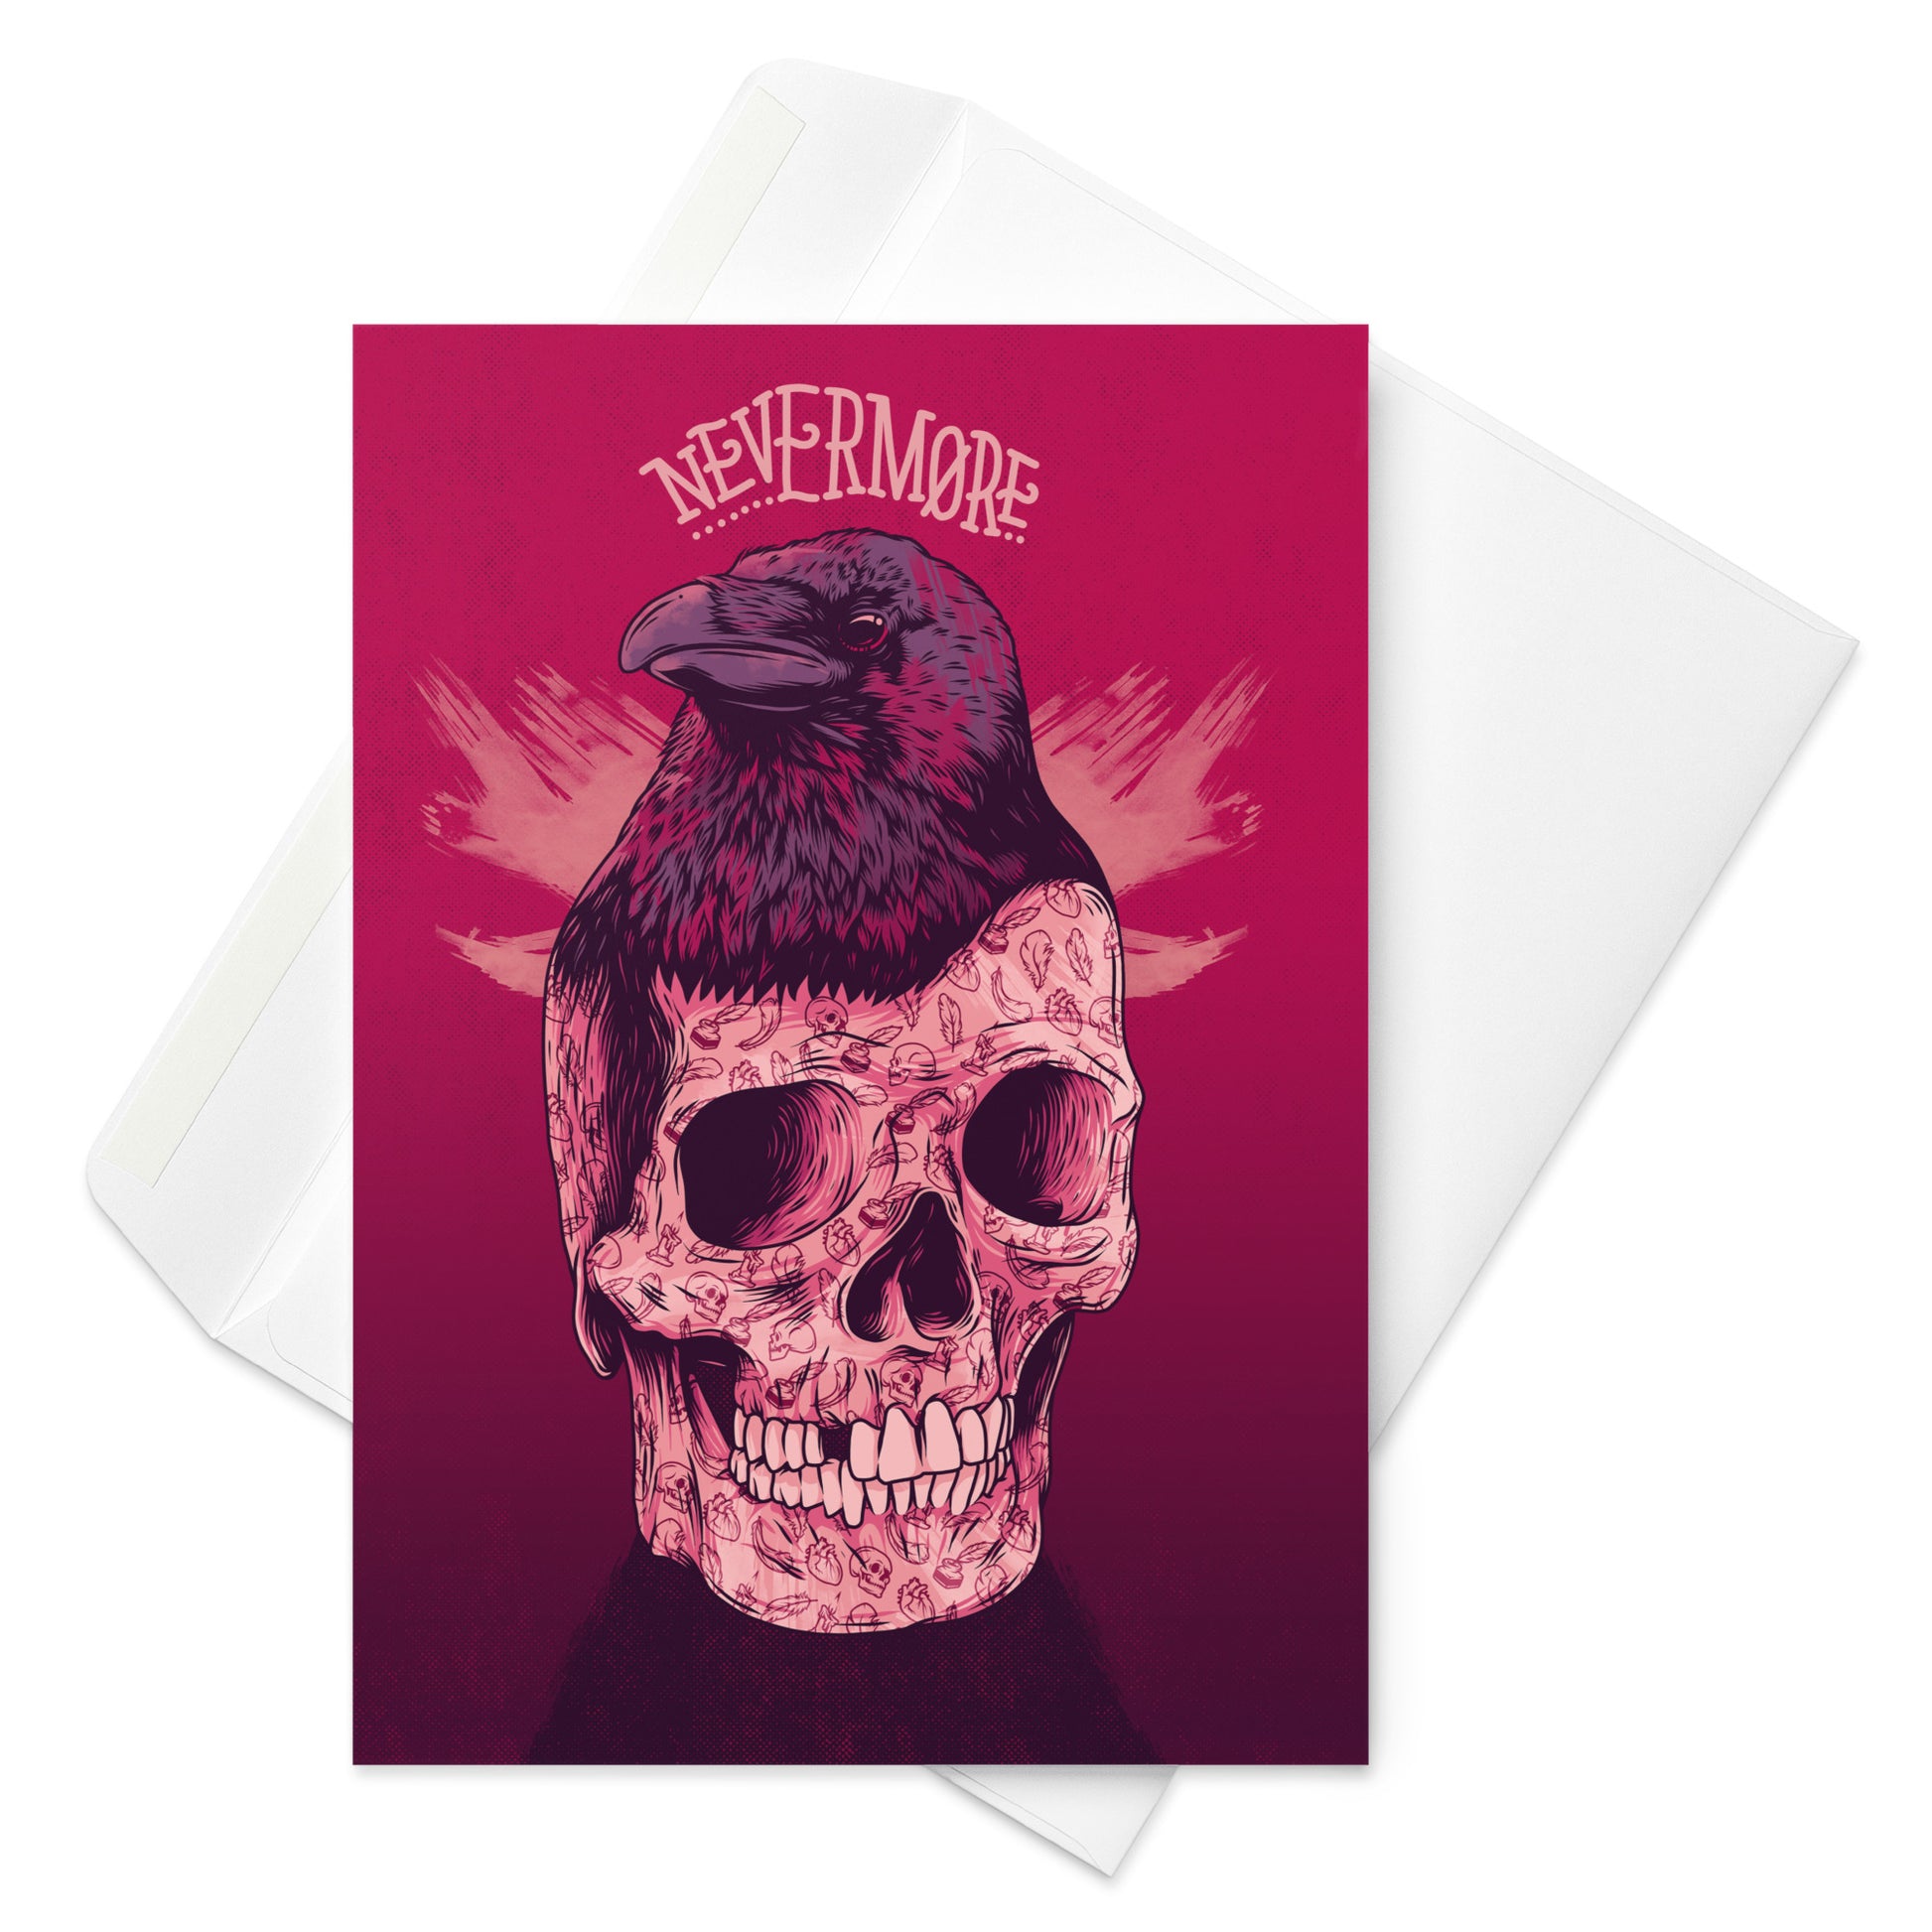 Edgar Allan Poe Skull & Raven Illustrated Greeting Card, featuring skull, raven, and Poe's portrait. 5.83x8.27